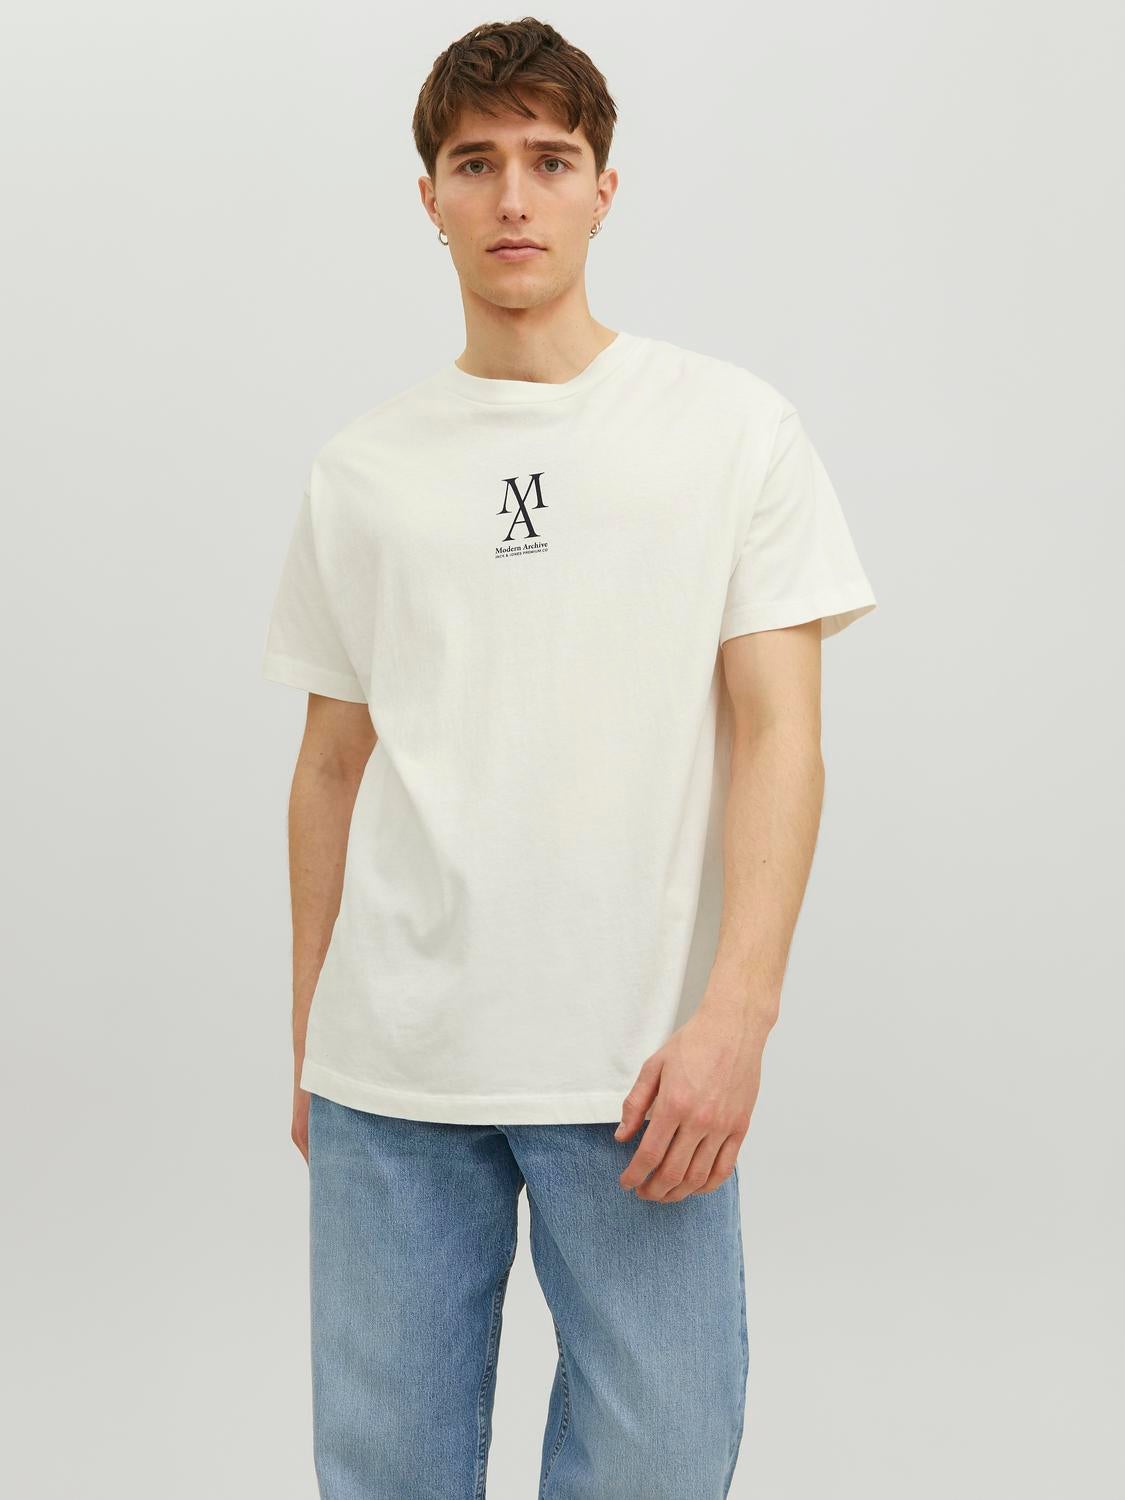 1V Louis Vuitton logo all over lettering Tshirt Navy